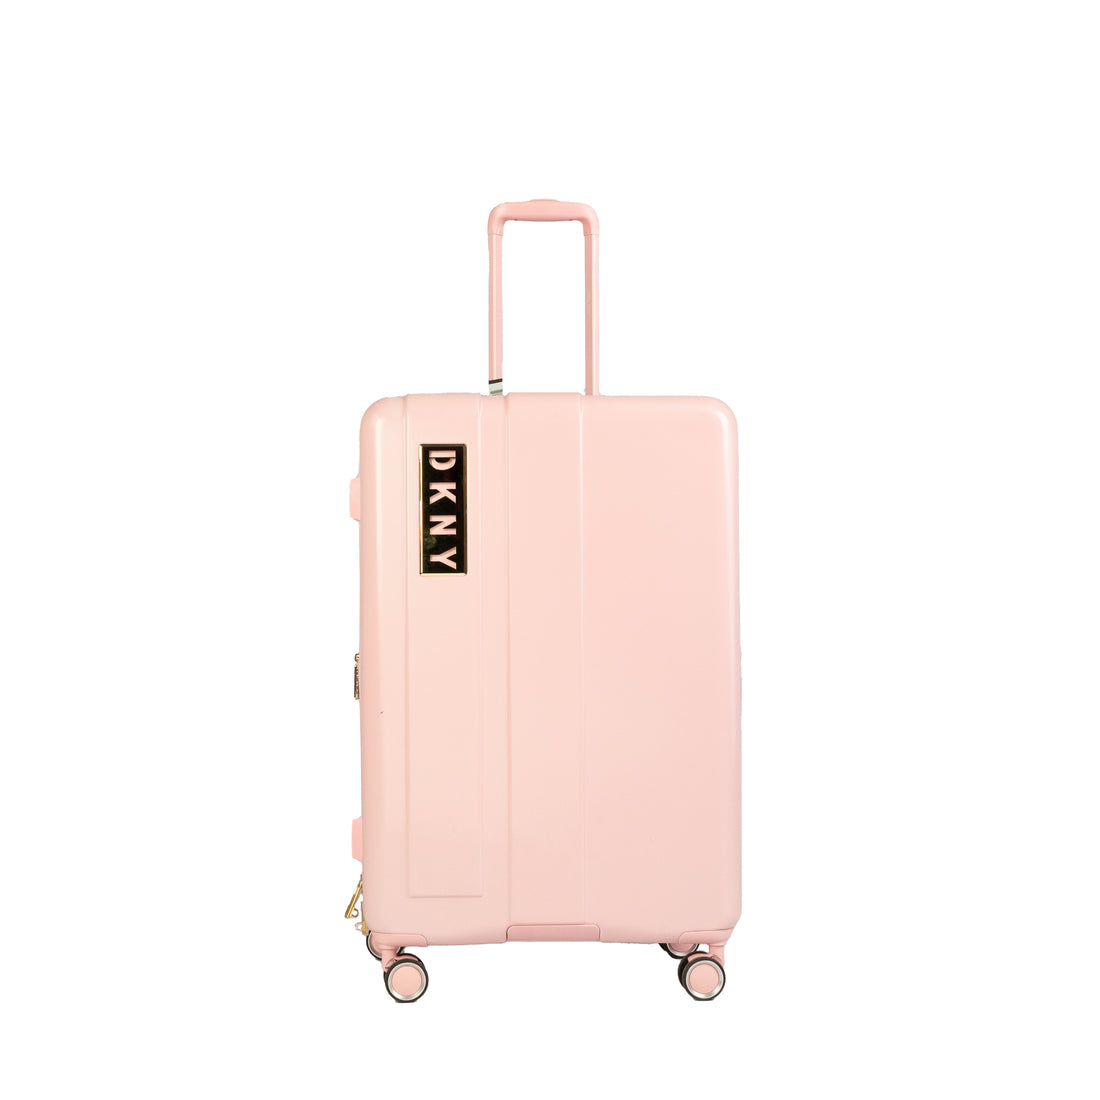 DKNY Pink Large Luggage